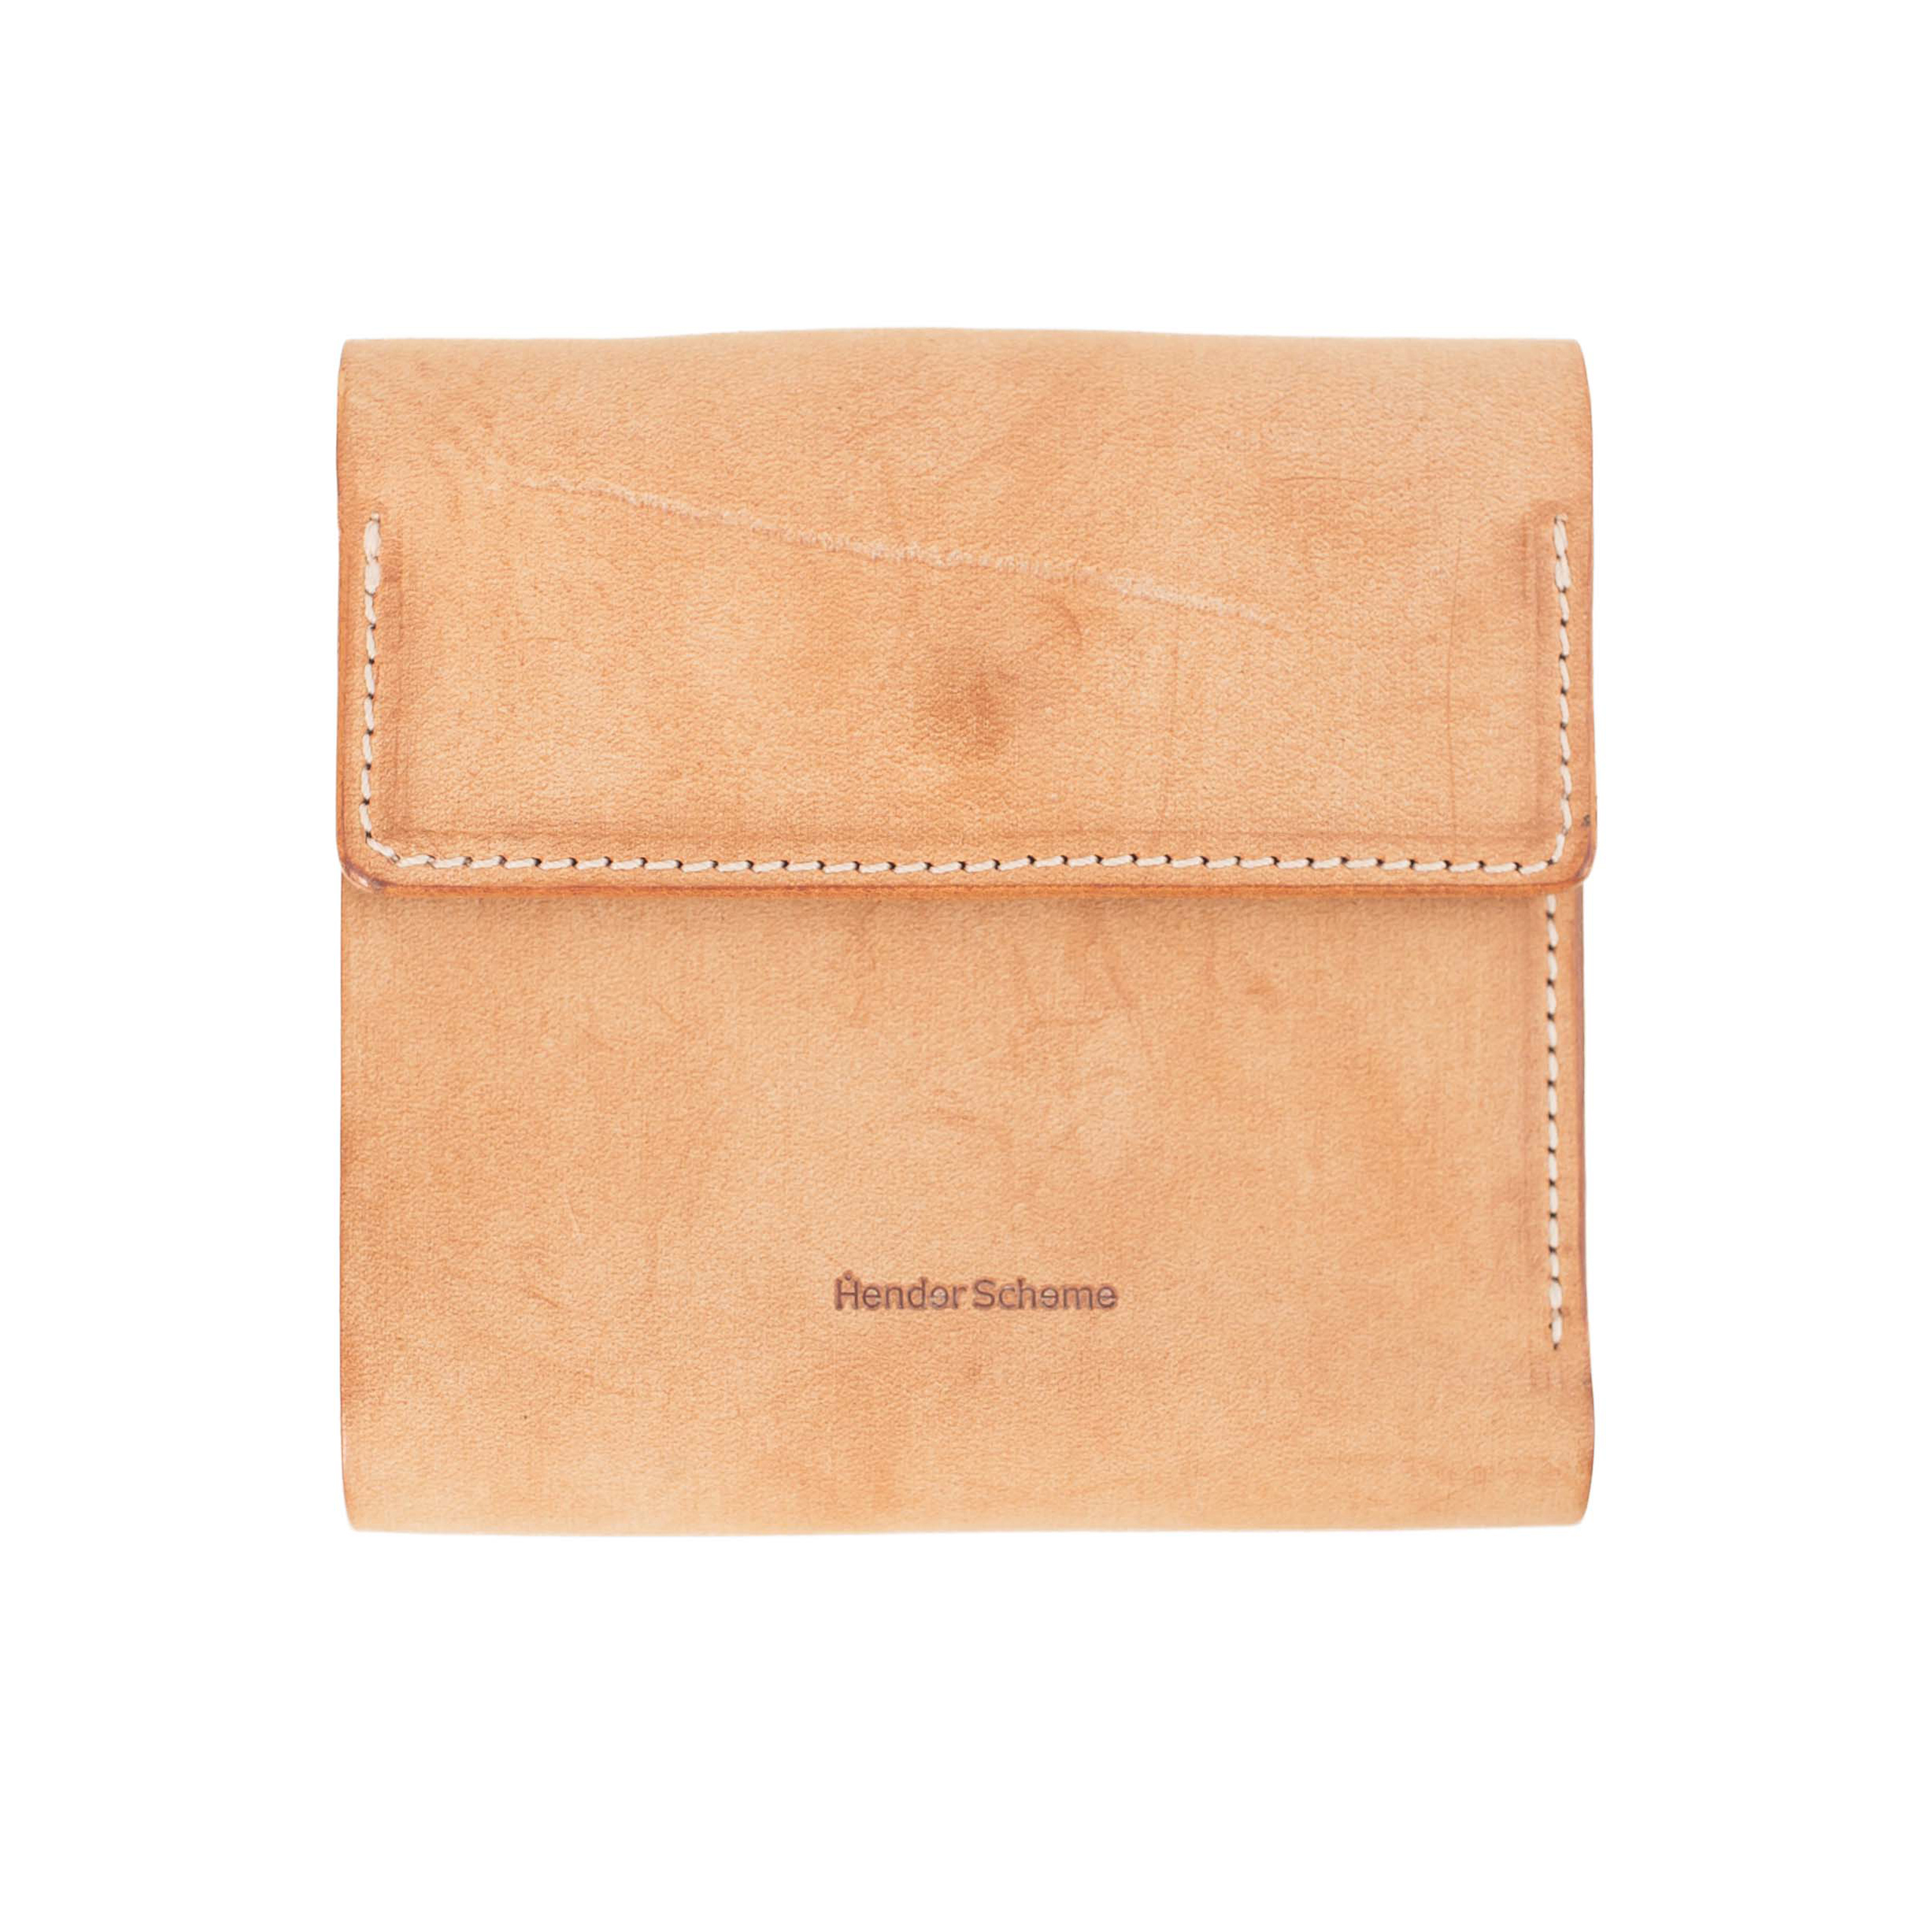 Buy Hender Scheme men beige leather wallet for $326 online on SV77,  LI-RC-CLW/ntr